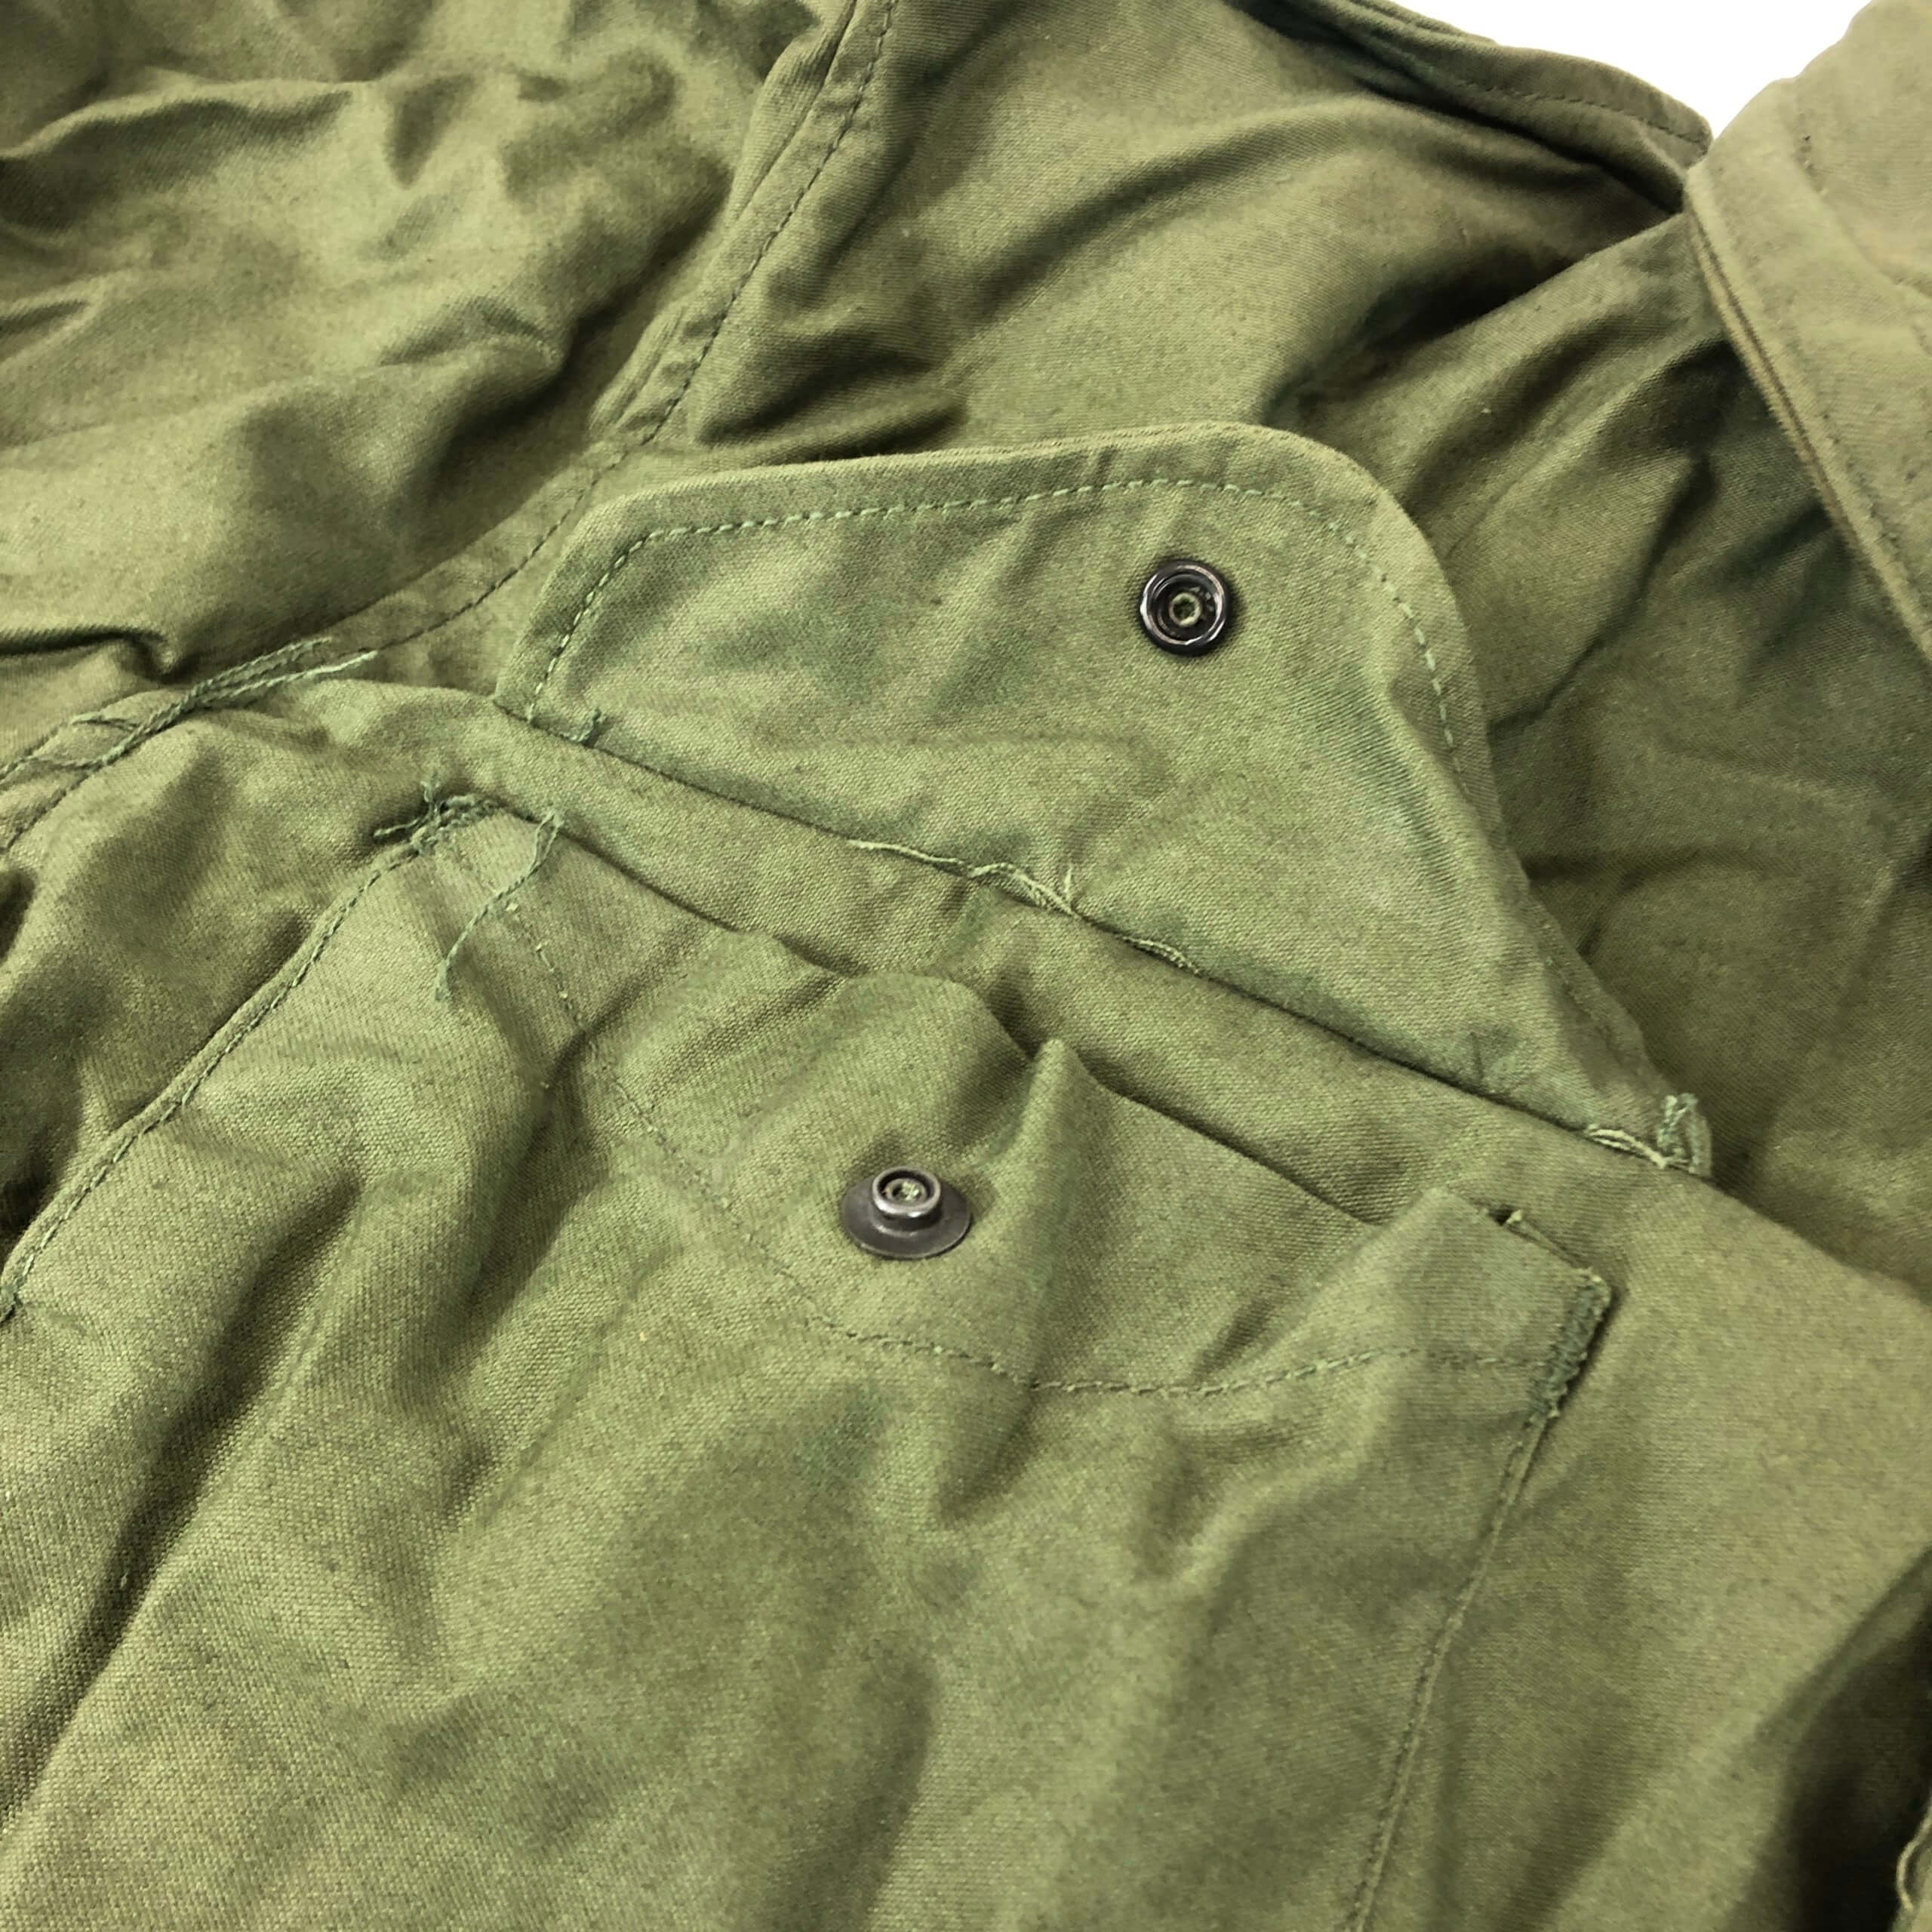 USGI M65 Field Jacket, OD Green [Genuine Issue]